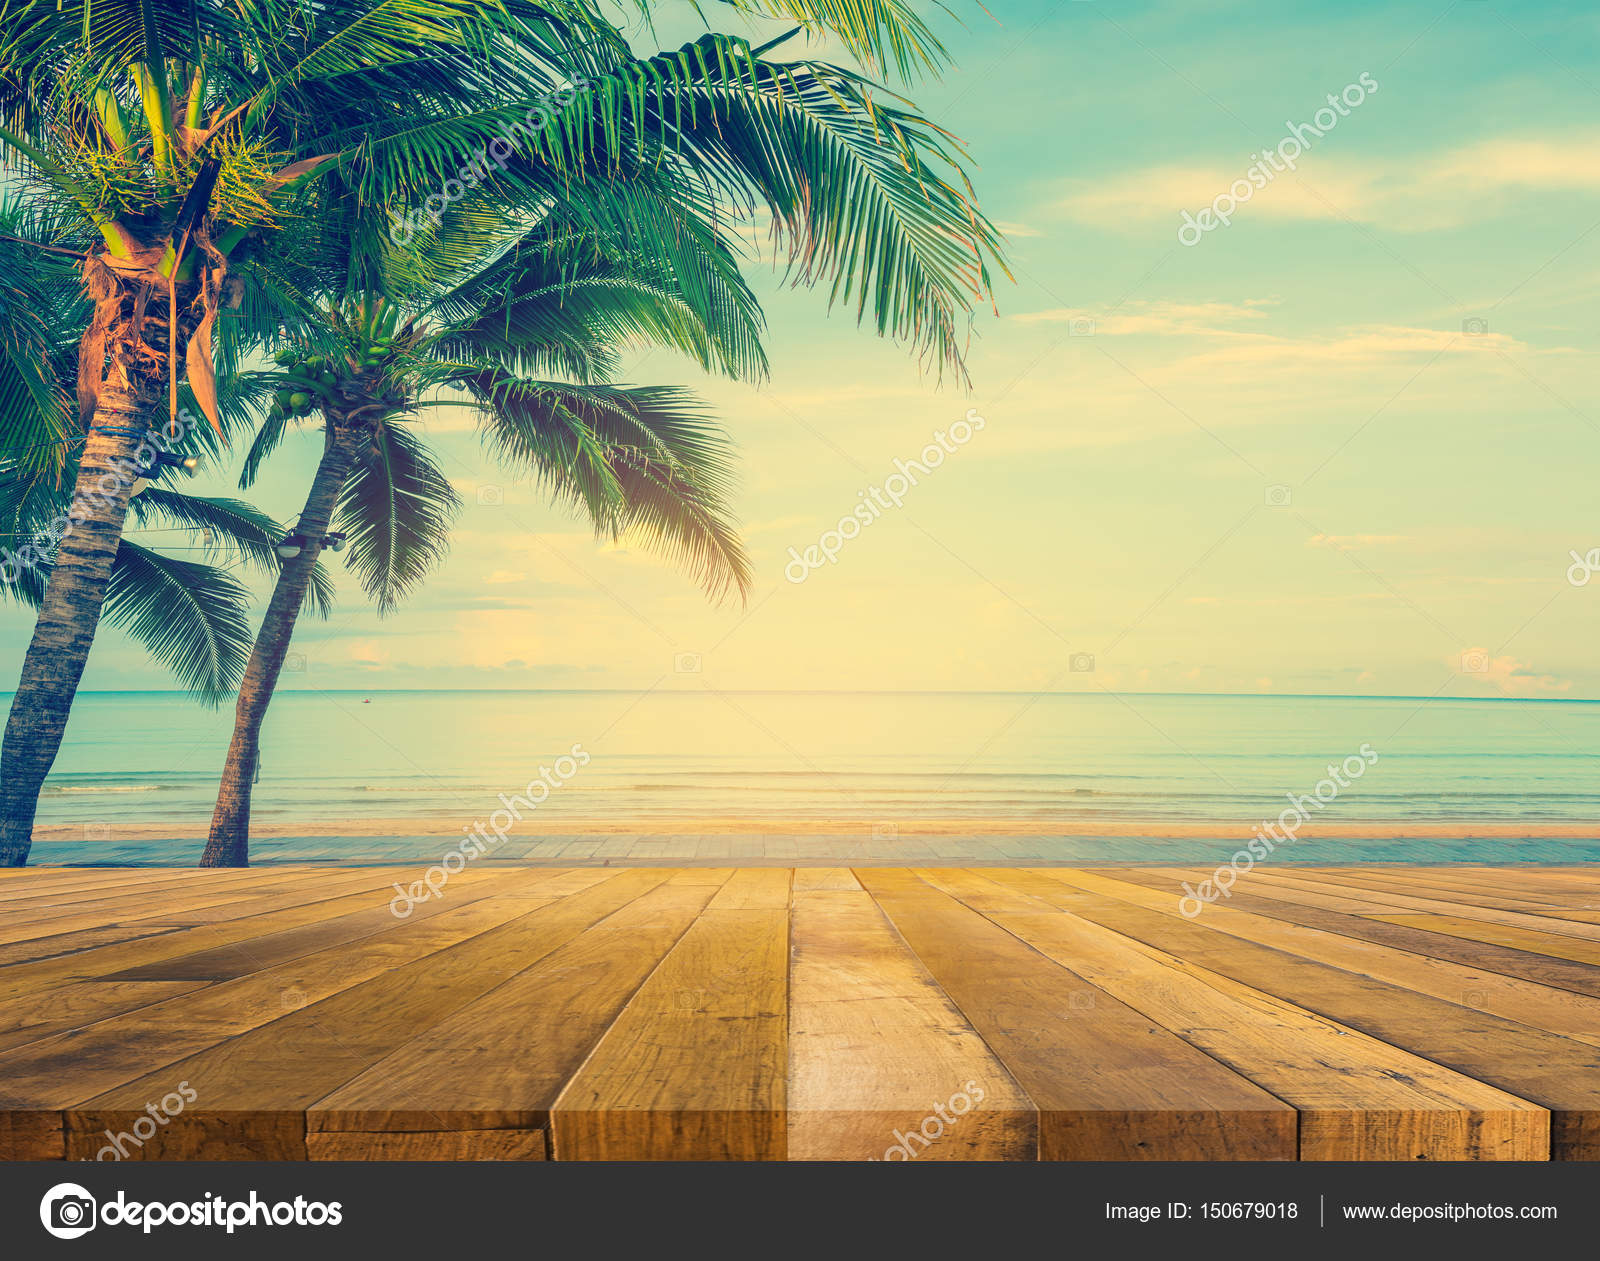 coconut tree at the beach. — Stock Photo © coffmancmu #150679018